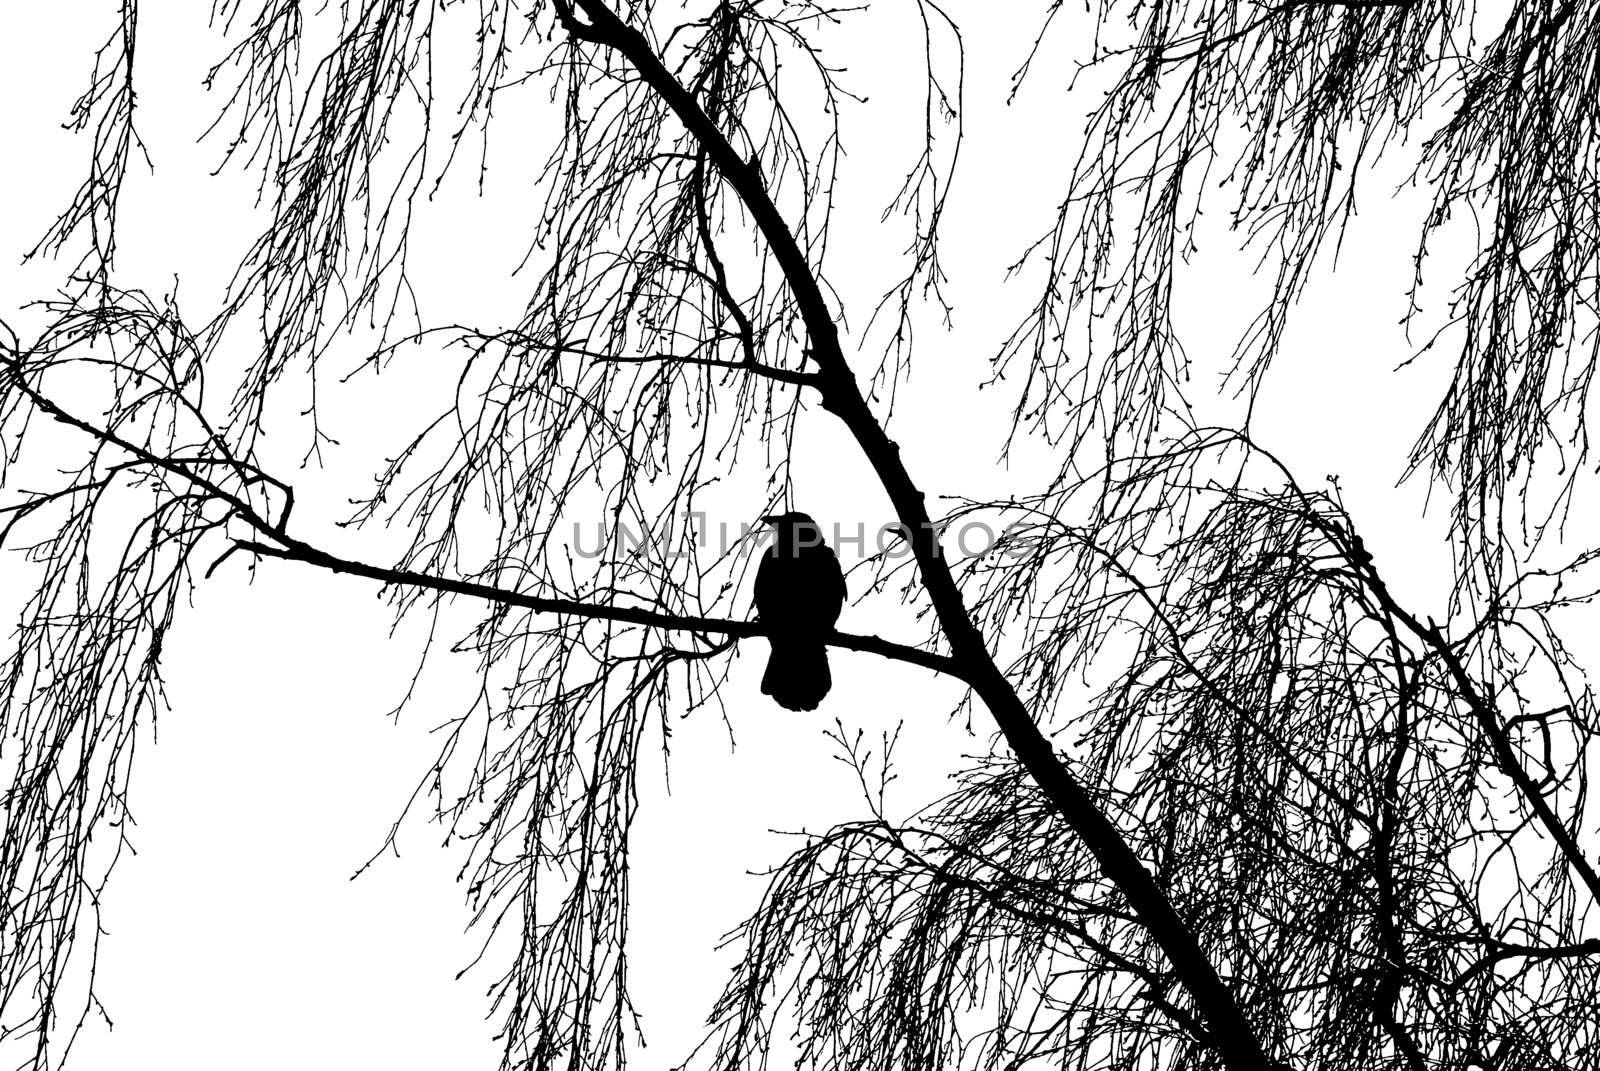 Silhouette of the bird on birch tree